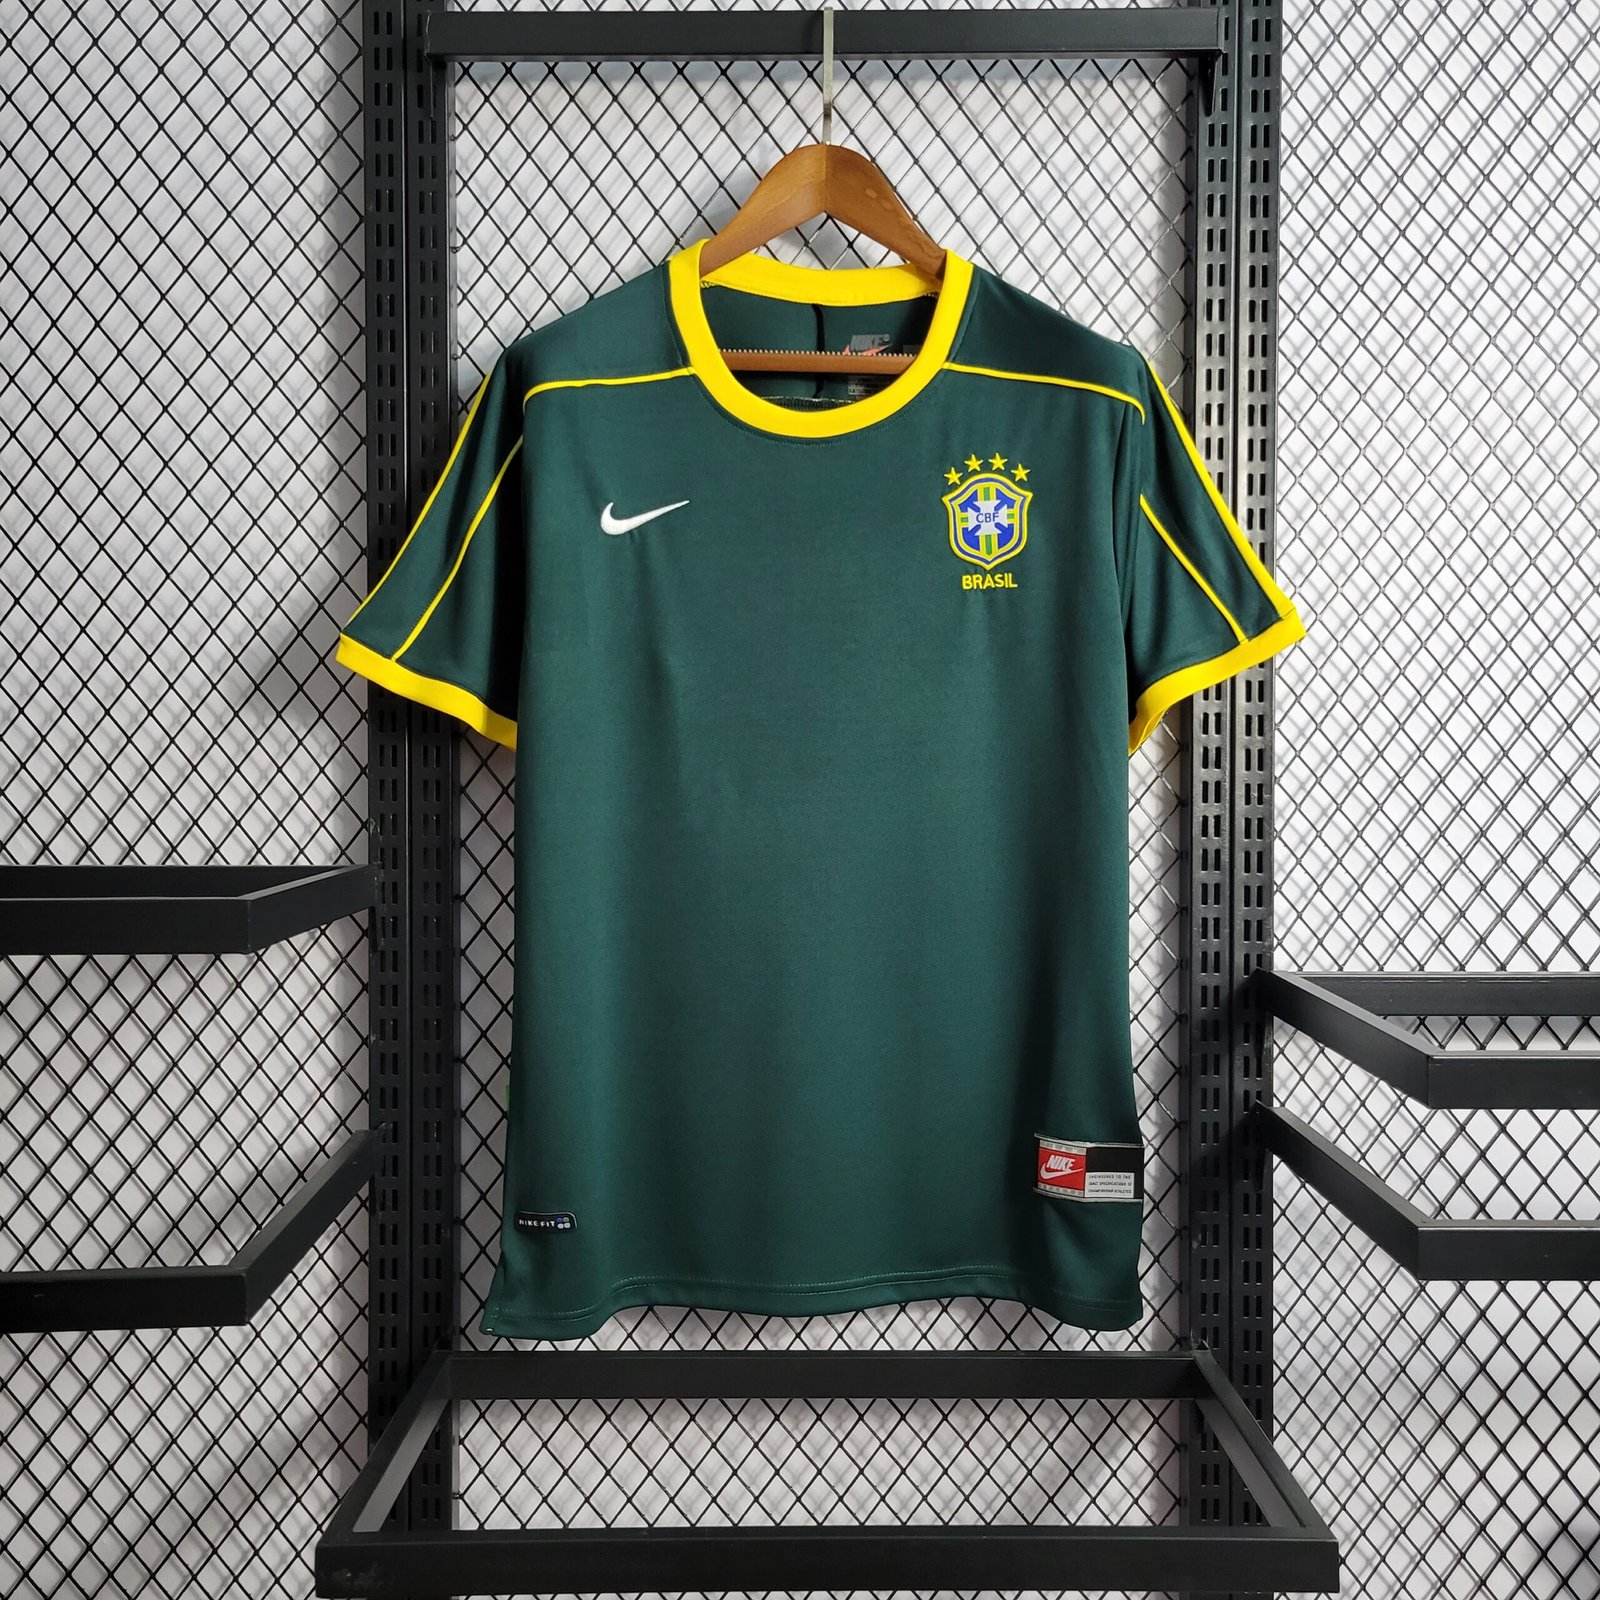 https://kssports23.com.br/wp-content/uploads/2022/08/camisa-goleiro-brasil-verde-1998-versao-torcedor-retro-1-scaled.jpg